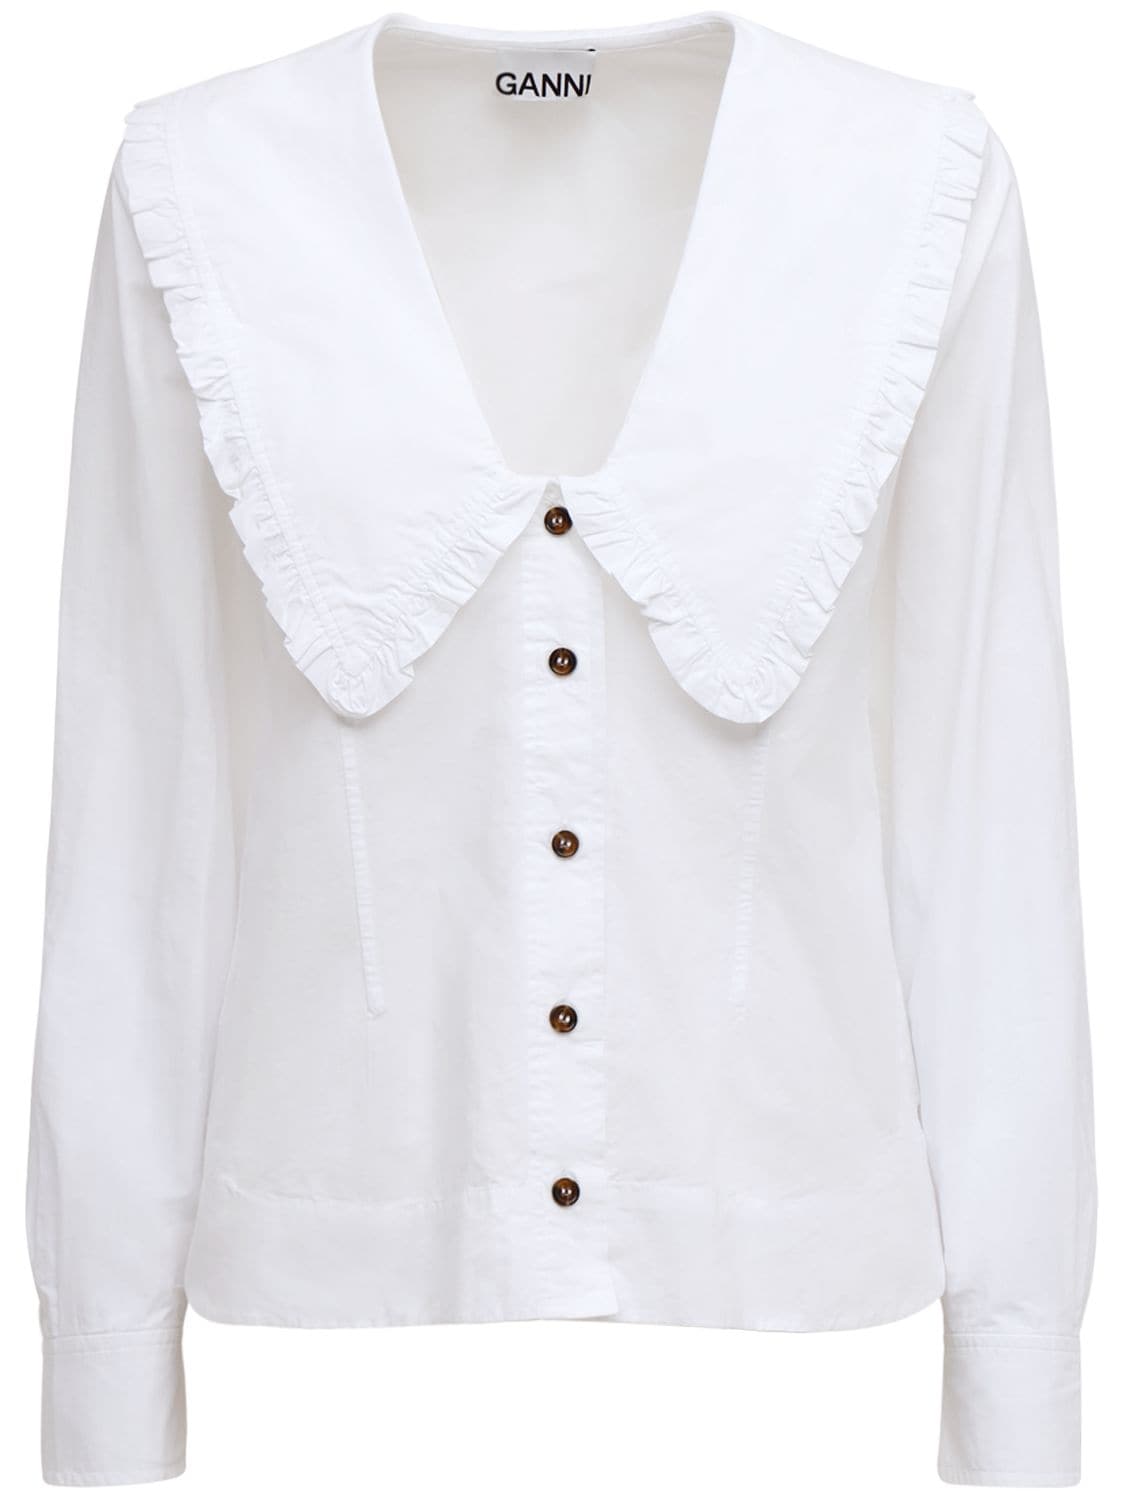 GANNI Organic Cotton Poplin Shirt